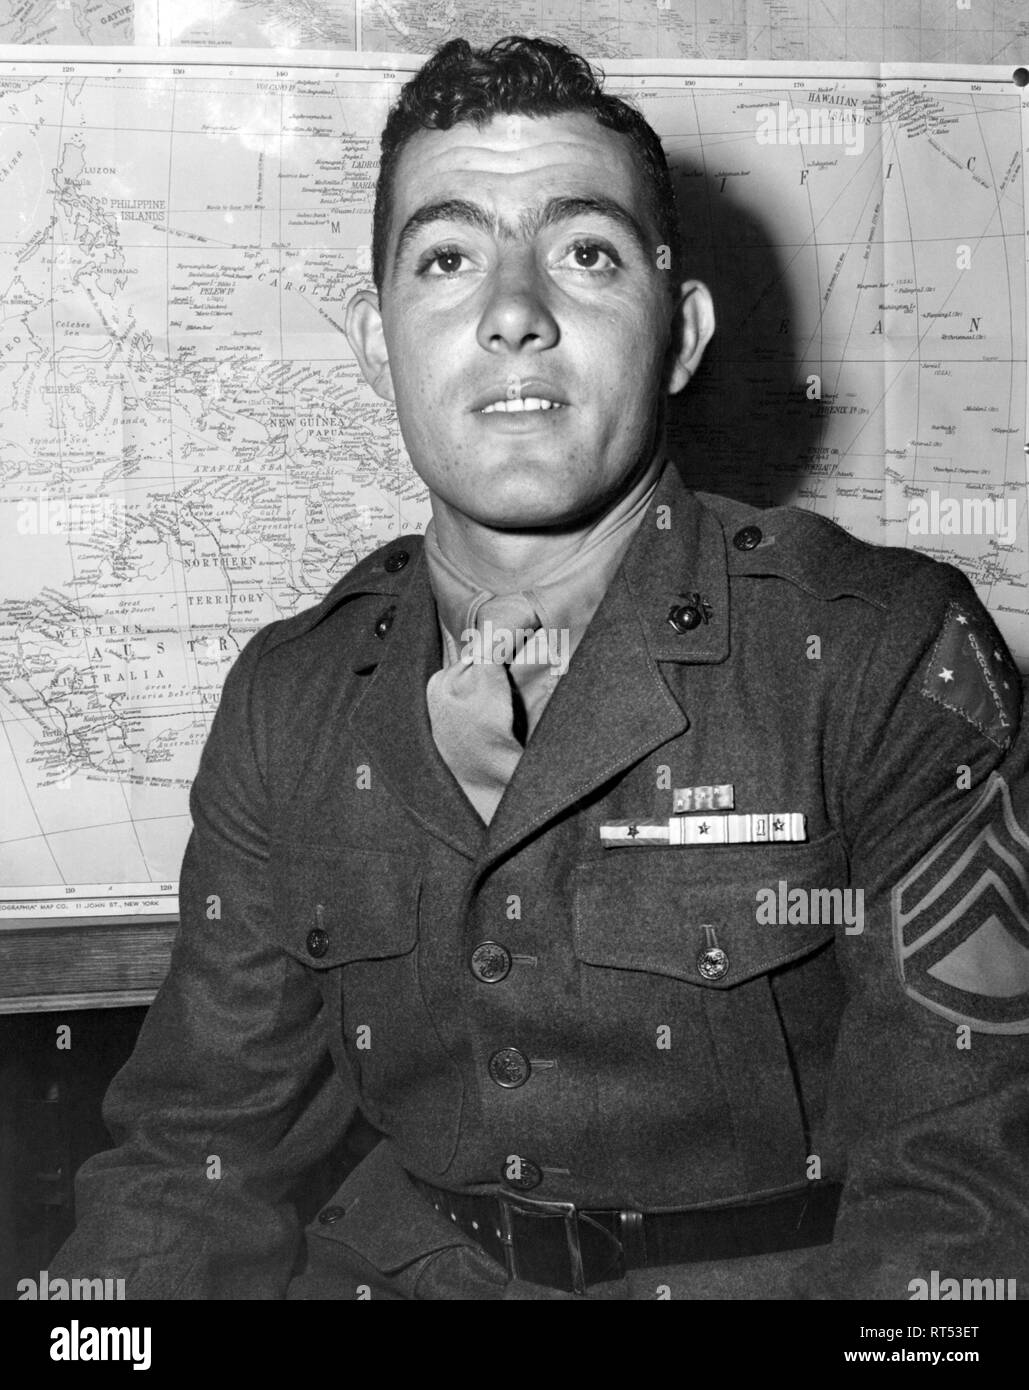 World War 2 photograph of Sergeant John Basilone, September 1943. Stock Photo